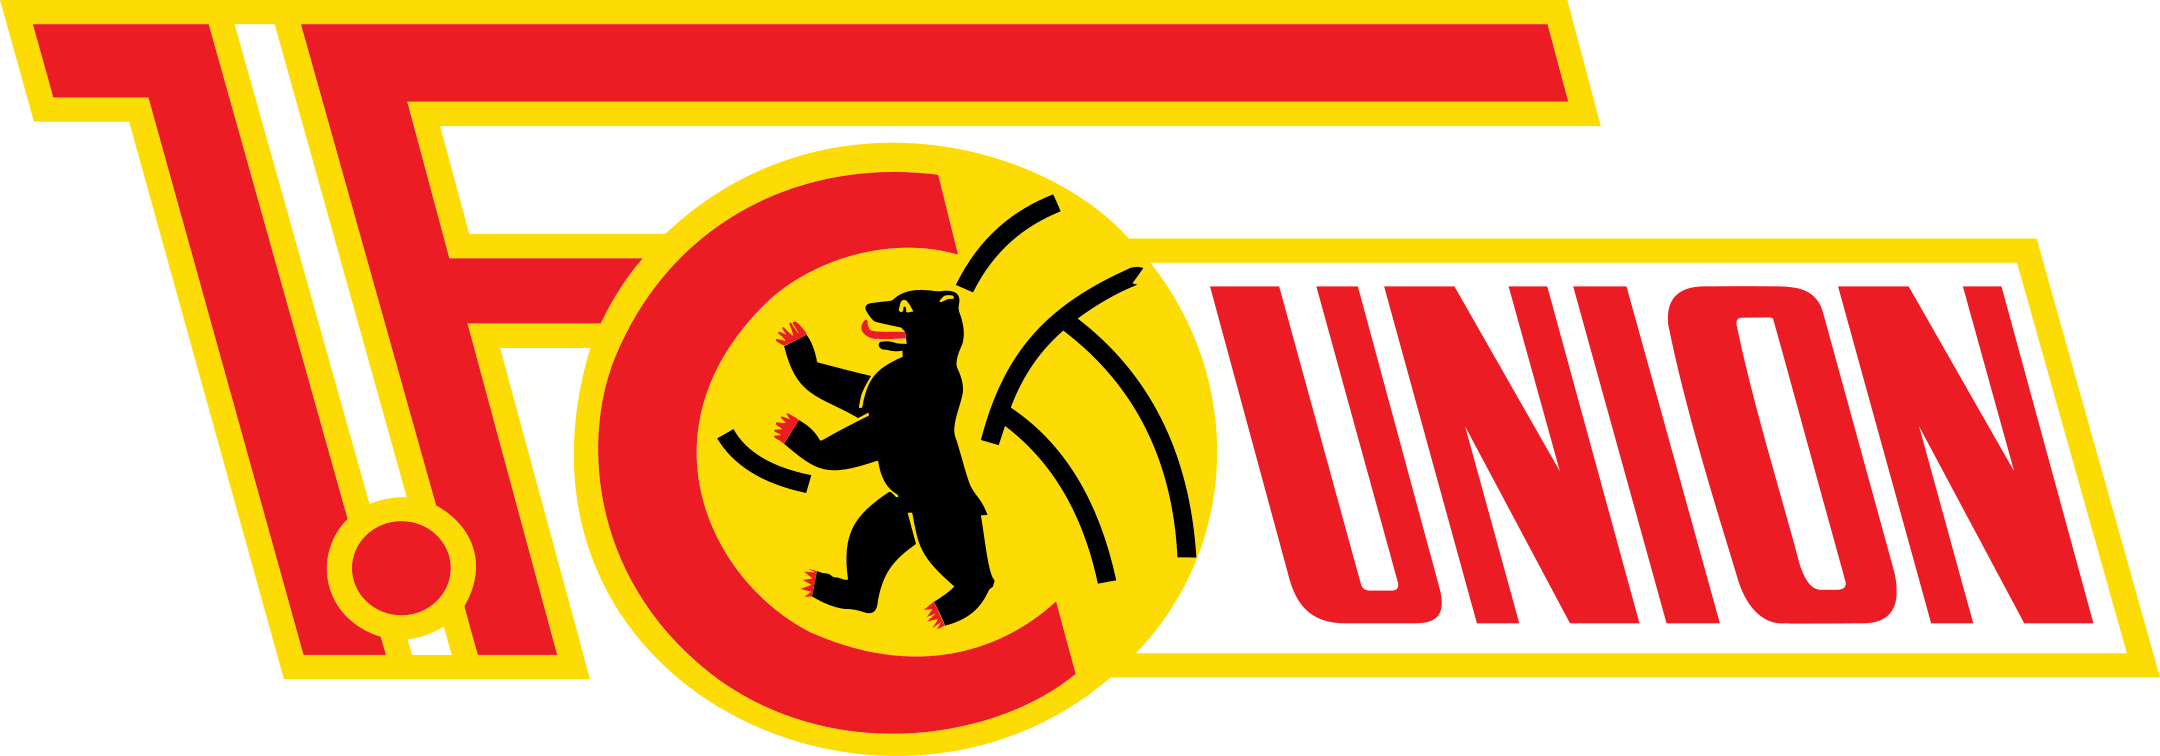 FC Union Berlin Logo.